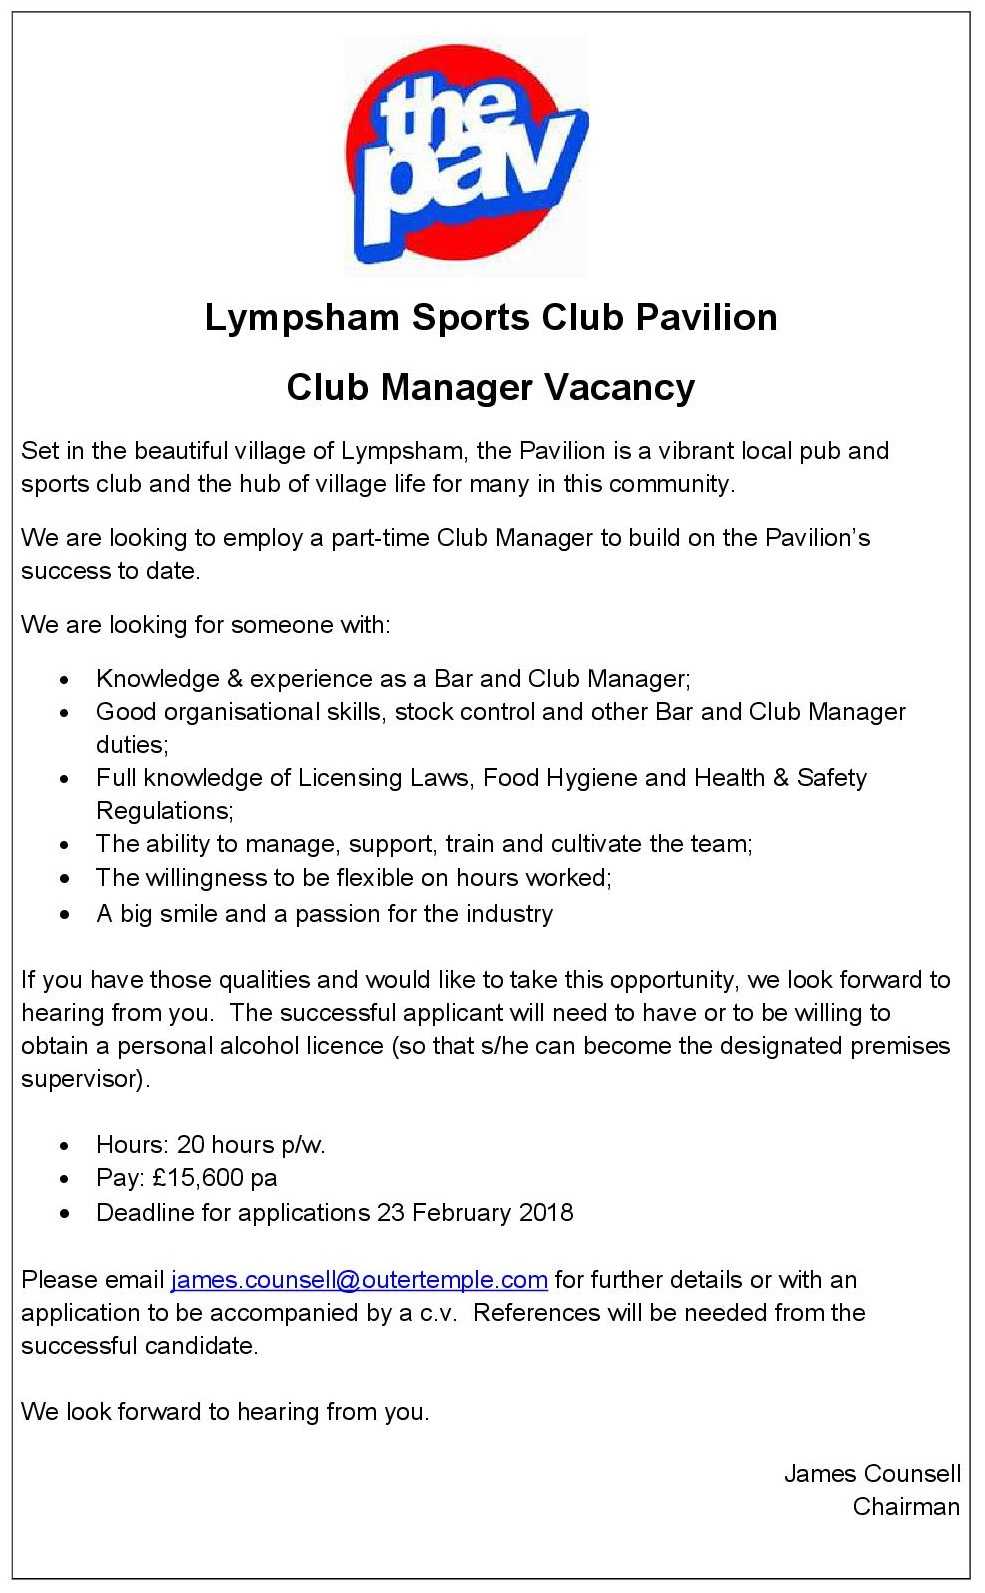 Lympsham Sport Club Pavilion - Club Manager Vacancy